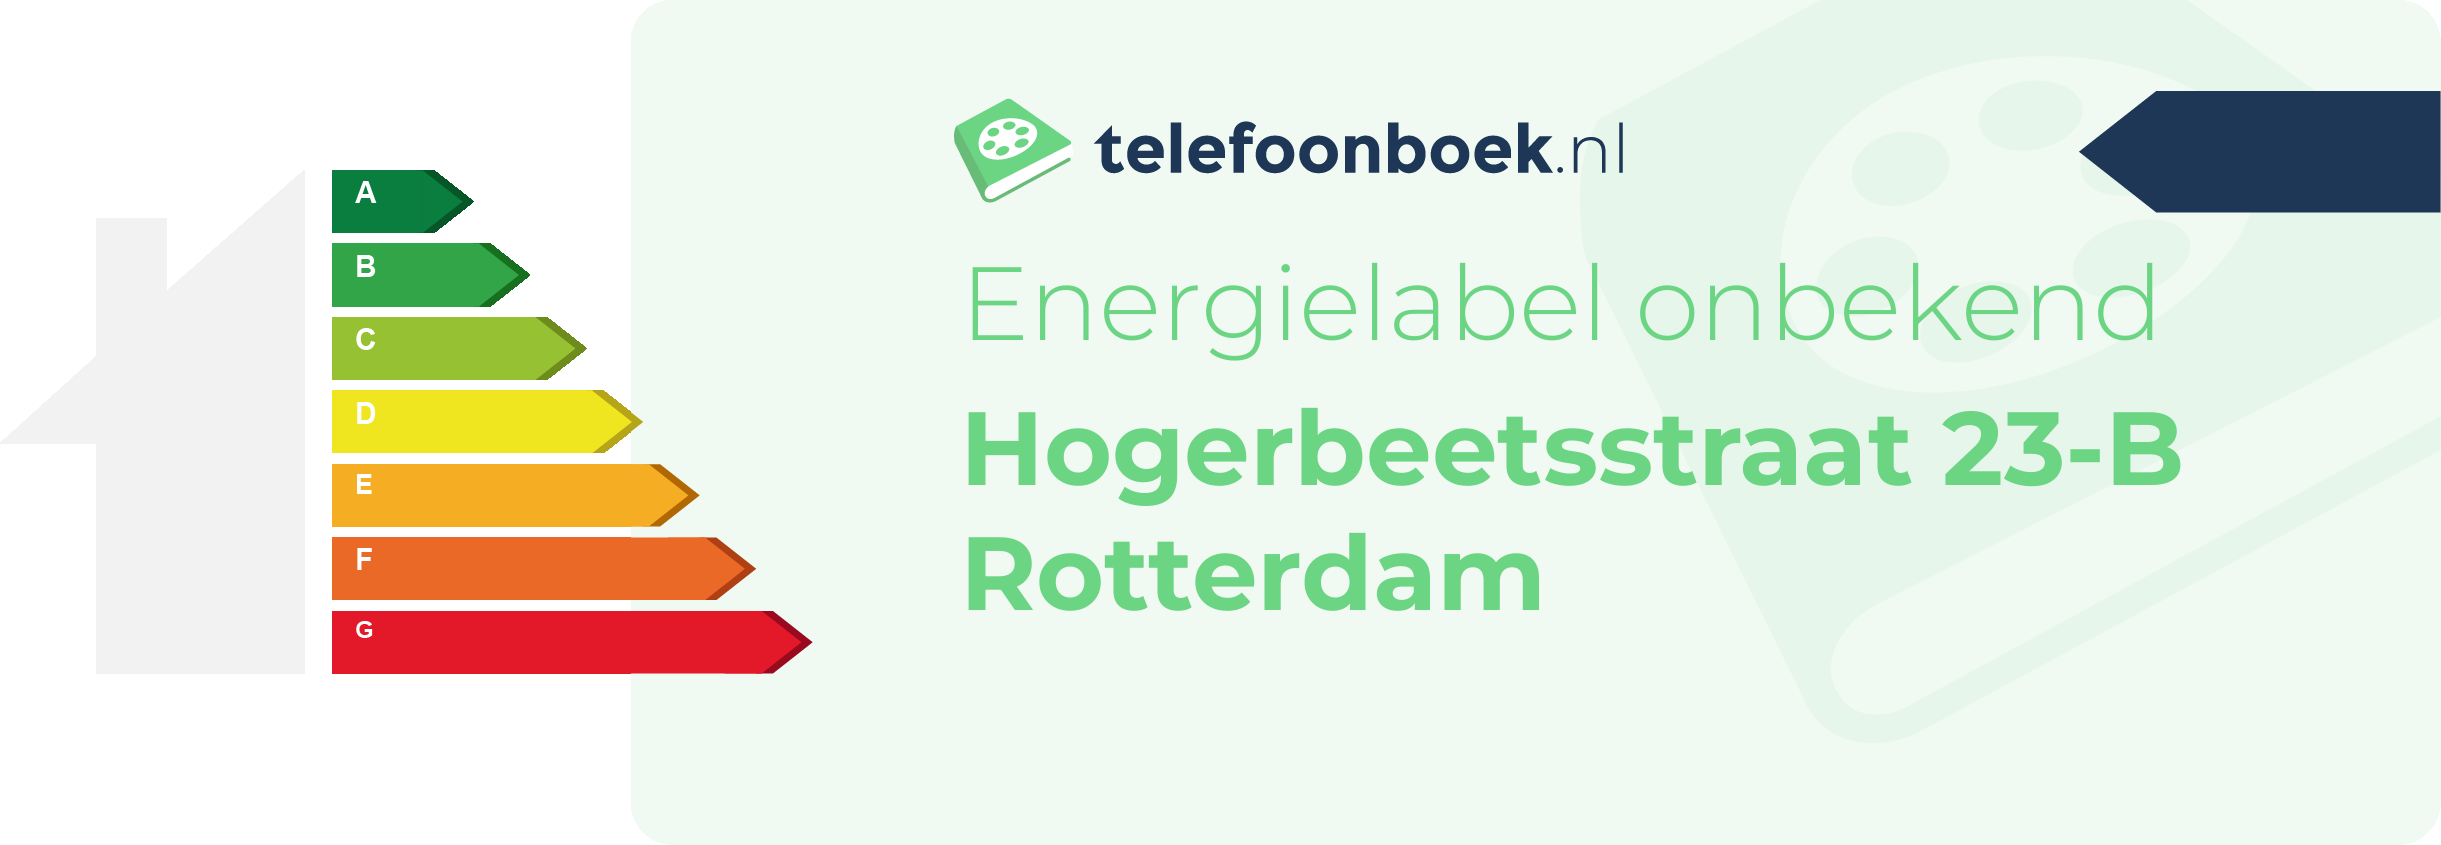 Energielabel Hogerbeetsstraat 23-B Rotterdam